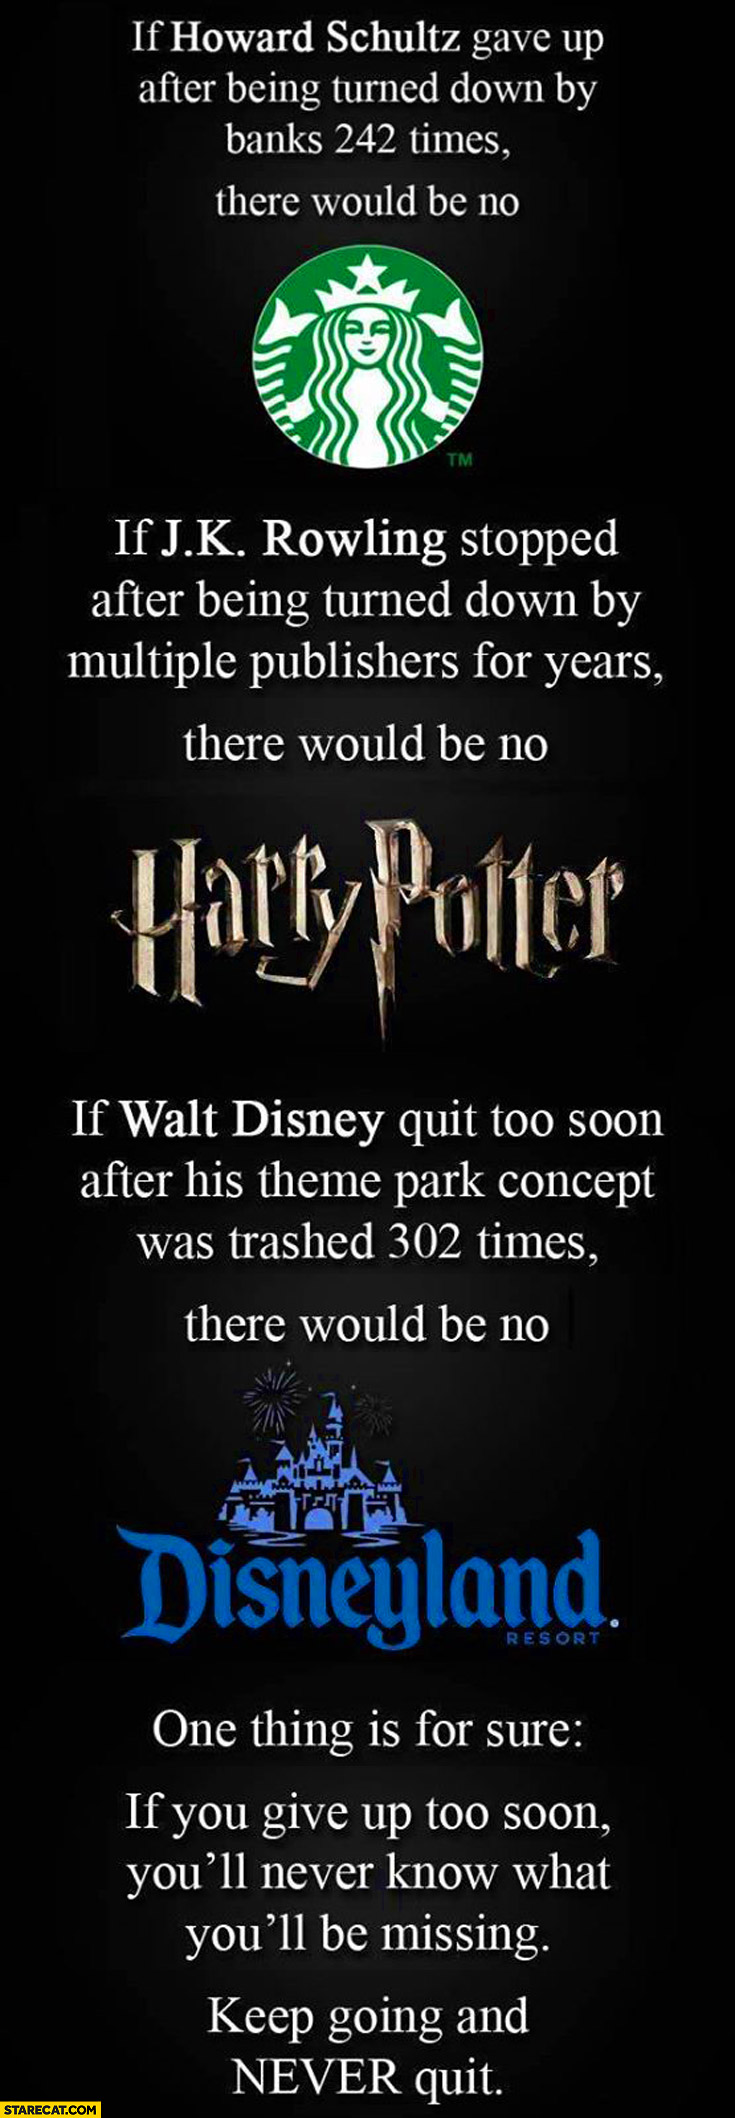 Starbucks Harry Potter Disneyland never give up